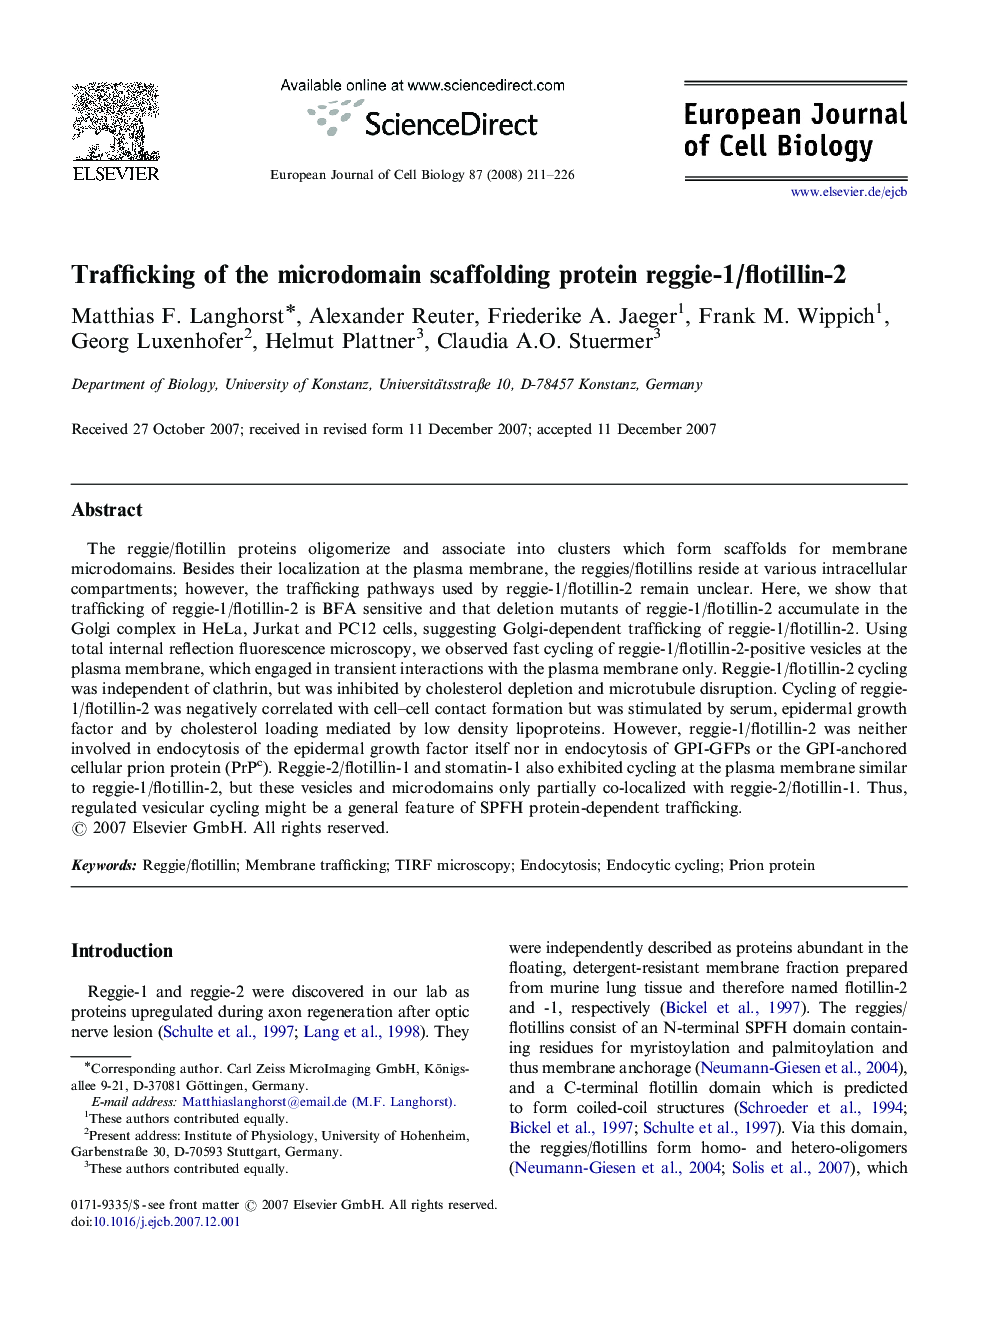 Trafficking of the microdomain scaffolding protein reggie-1/flotillin-2